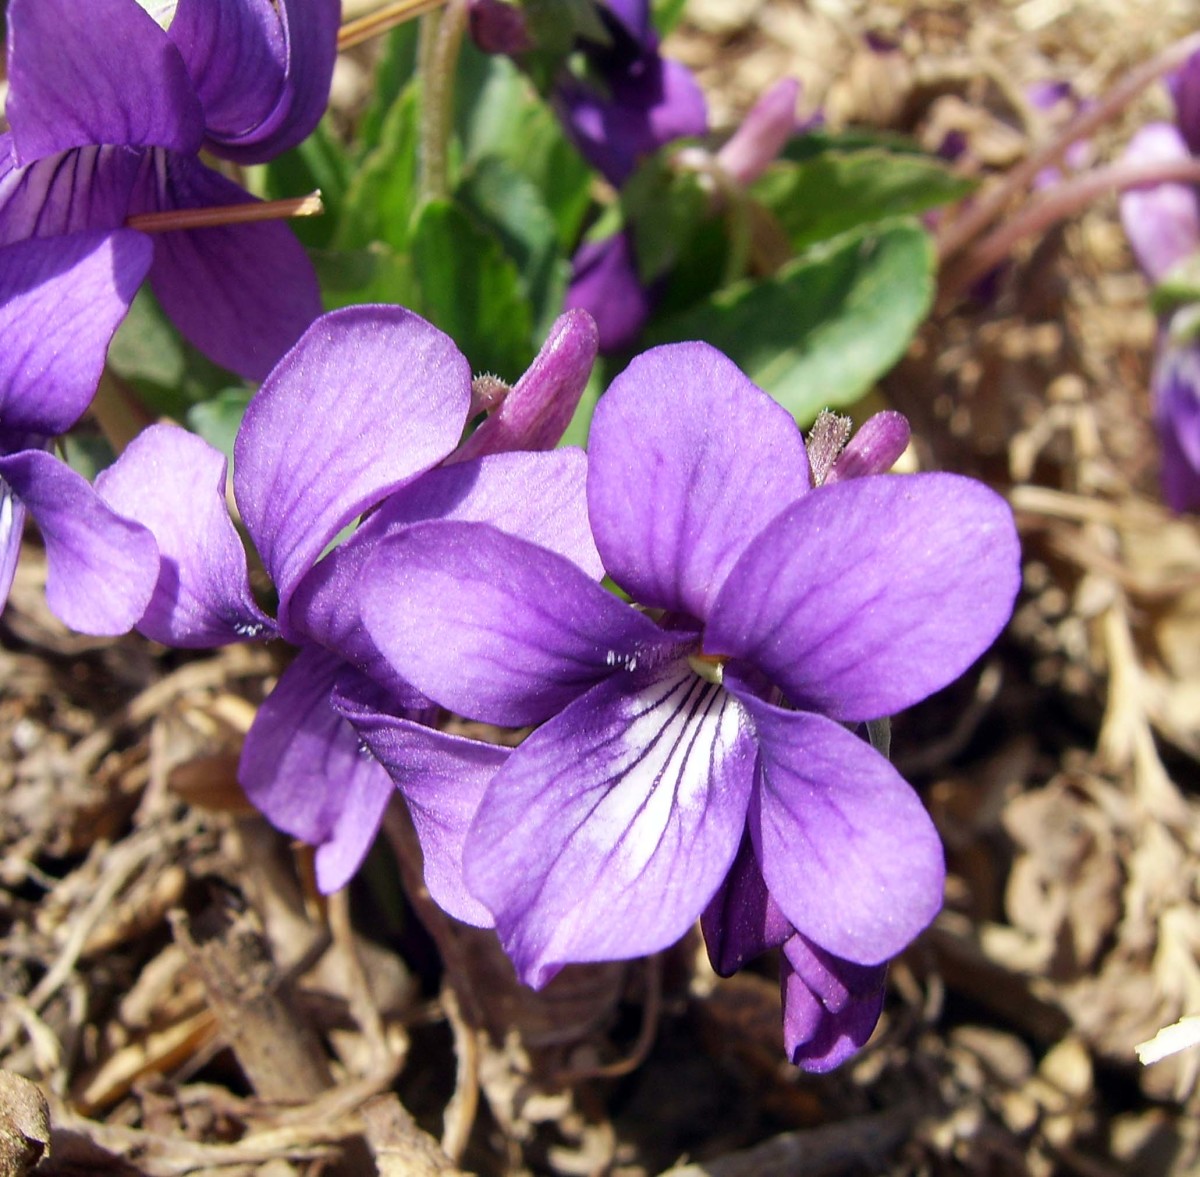 Purple Violets or Viola